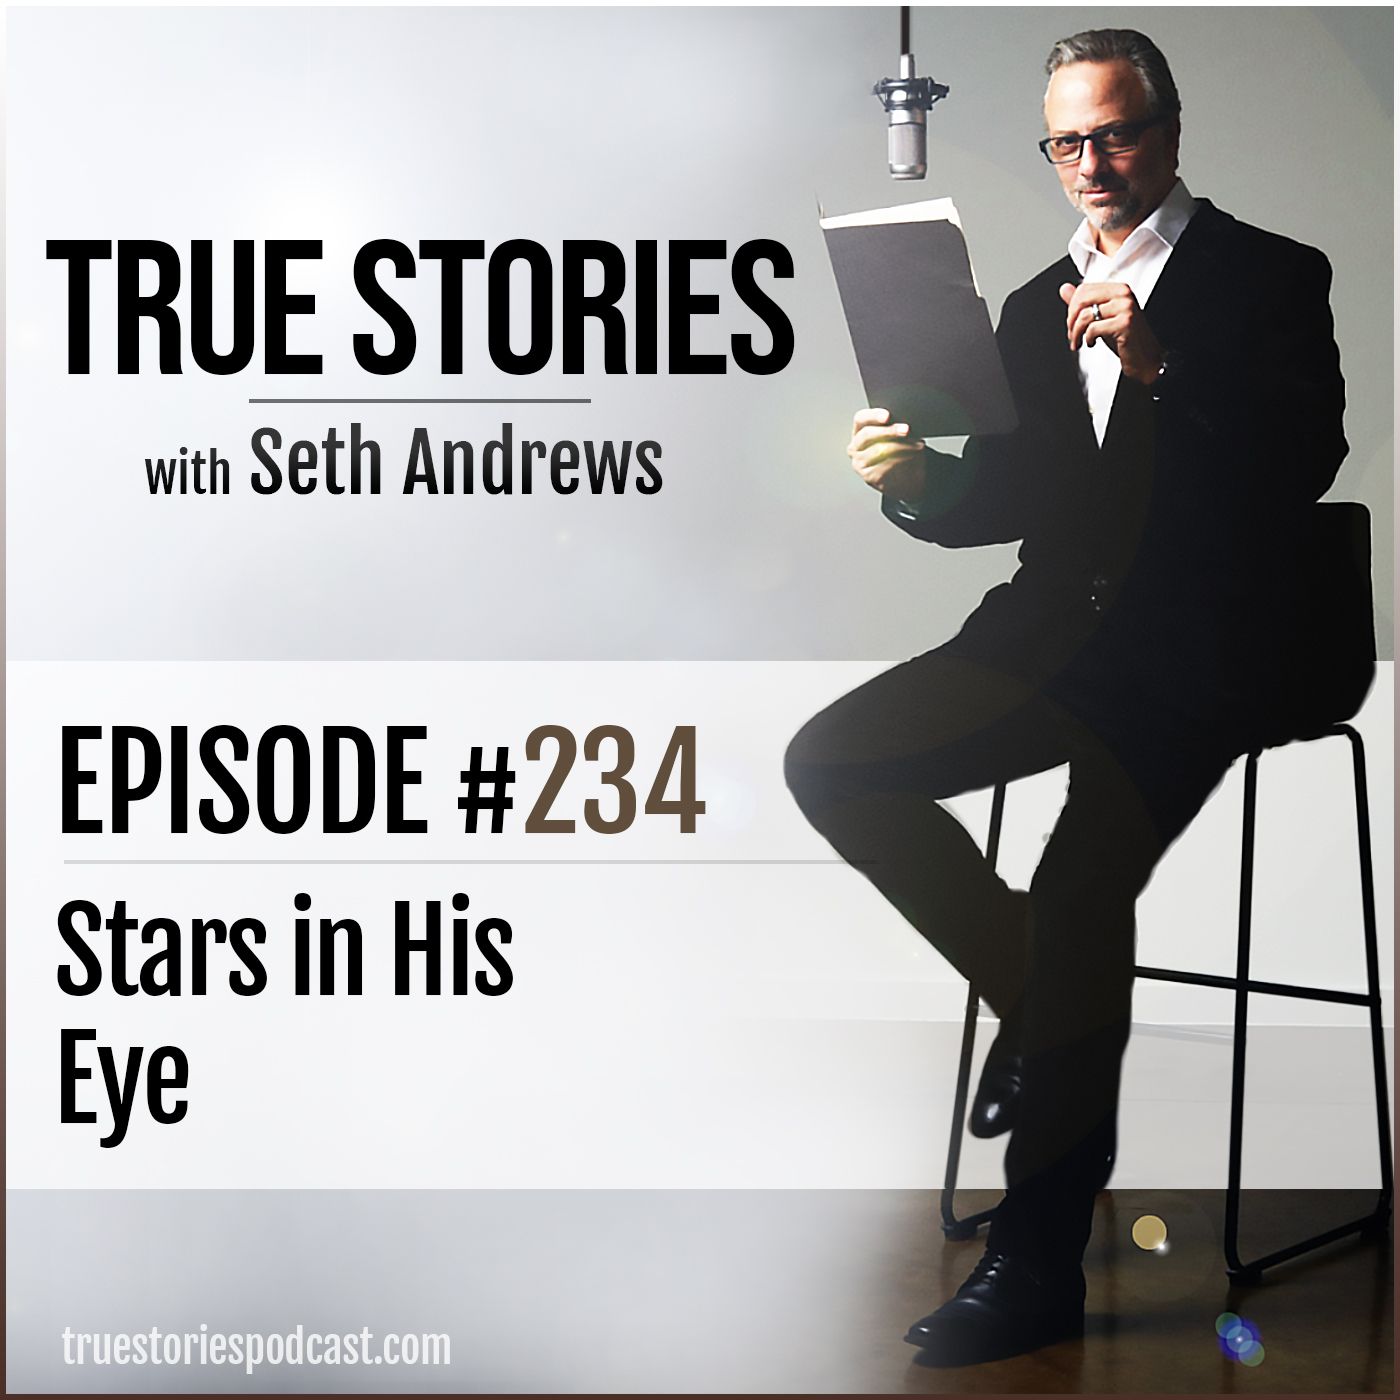 True Stories #234 - Stars in His Eye